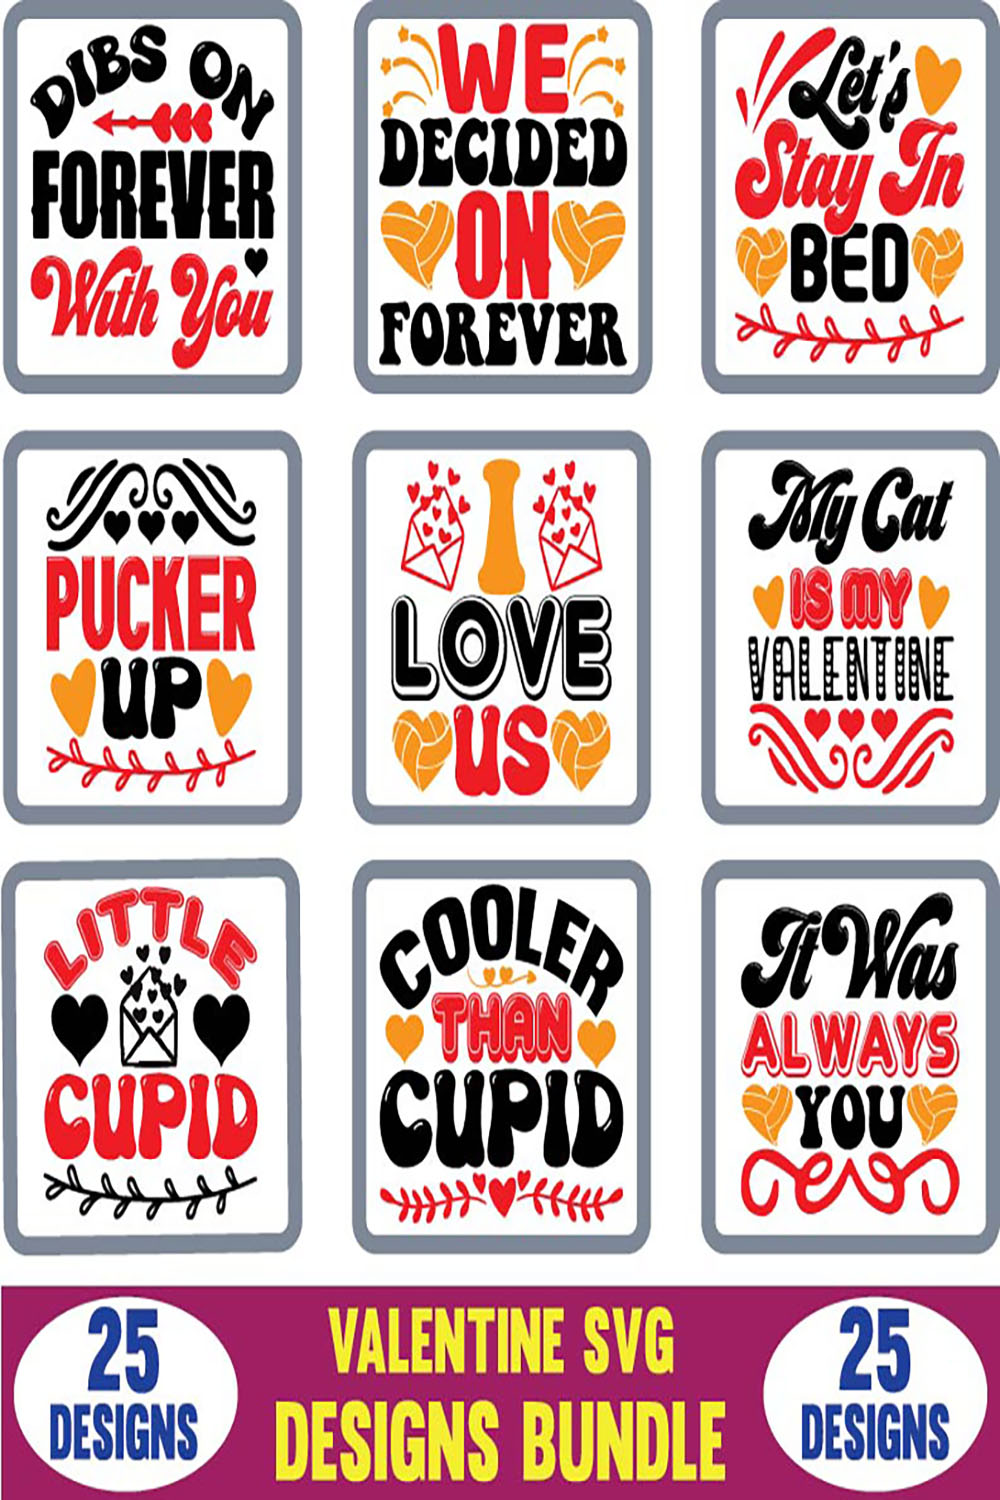 Valentine SVG Designs Bundle T-shirt Pinterest.